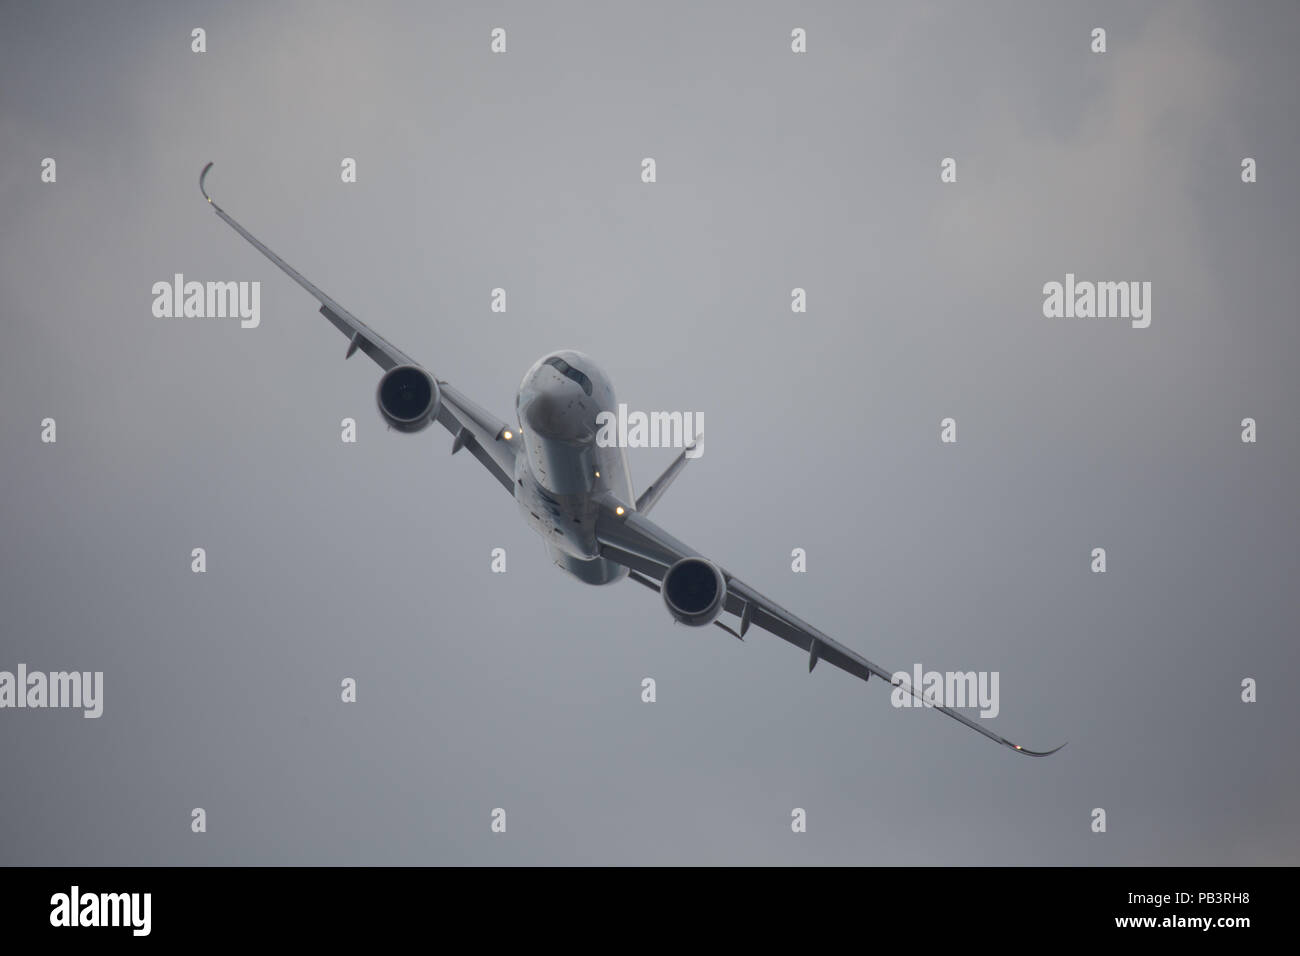 farnborough airshow 2018 Stock Photo